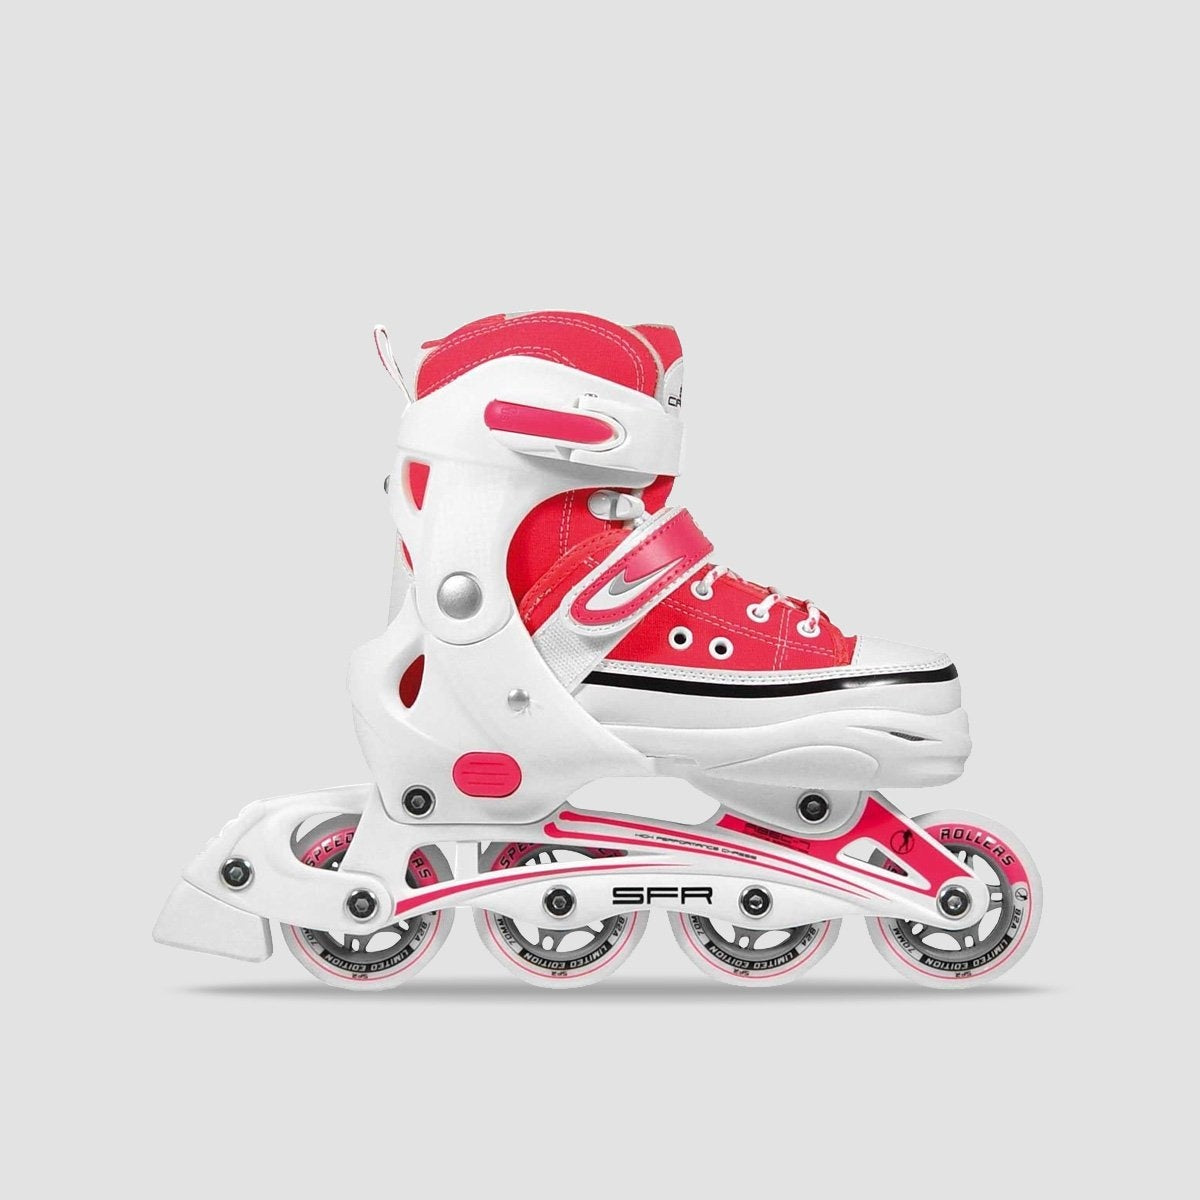 IOKDAD Roller Skates for Kids Girls Boys, 4 Sizes Adjustable